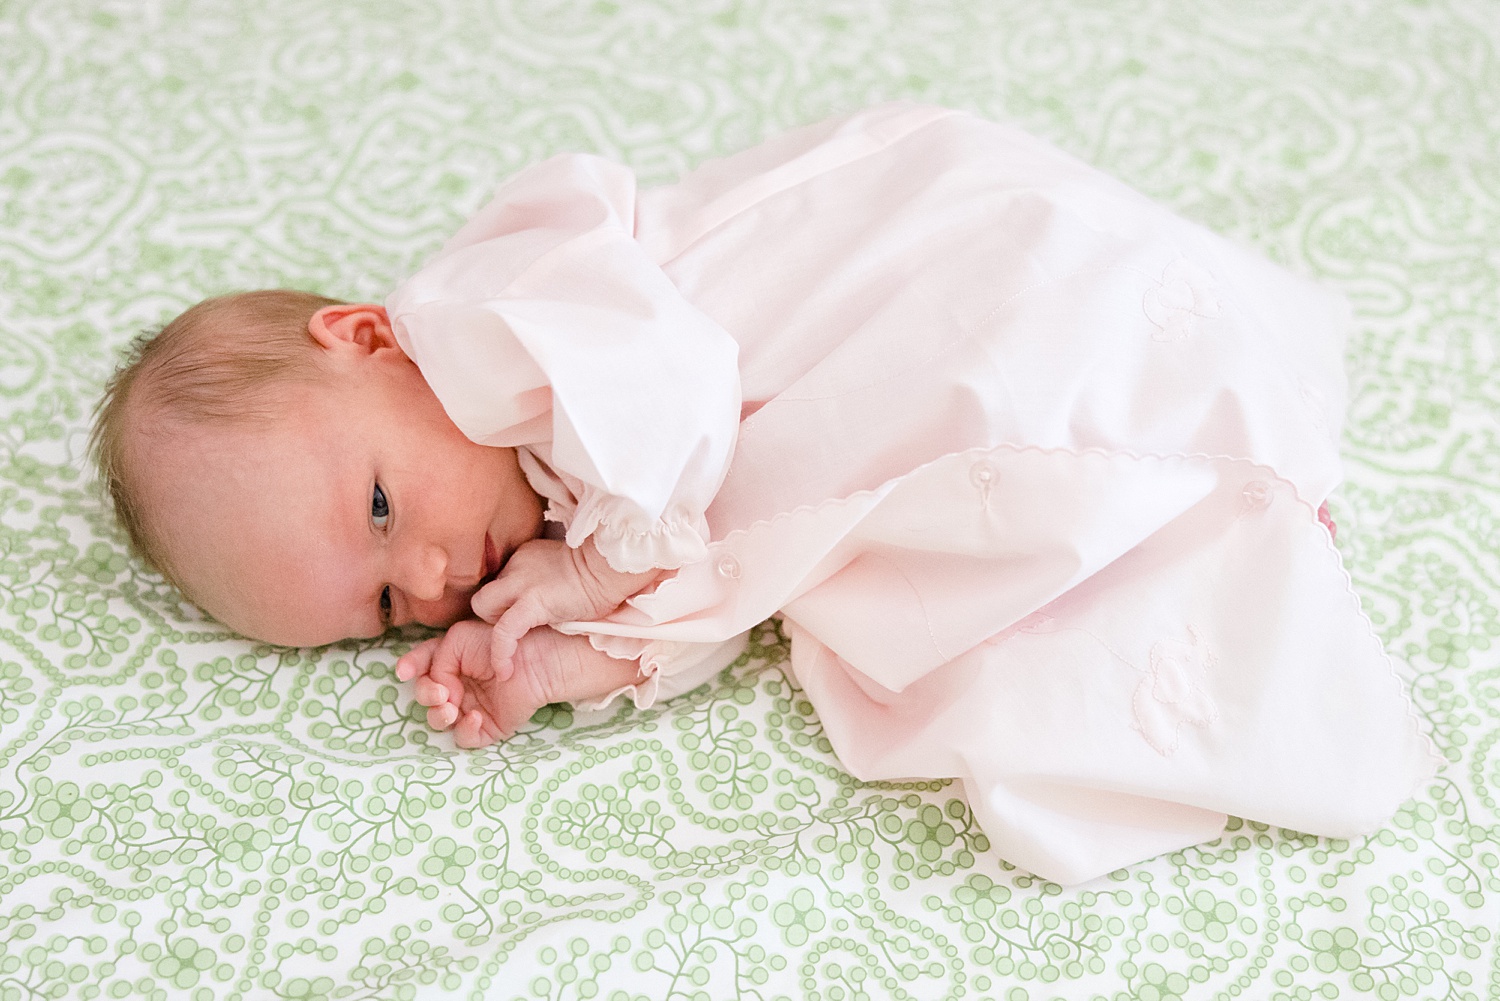 newborn lays on green patterned sheet